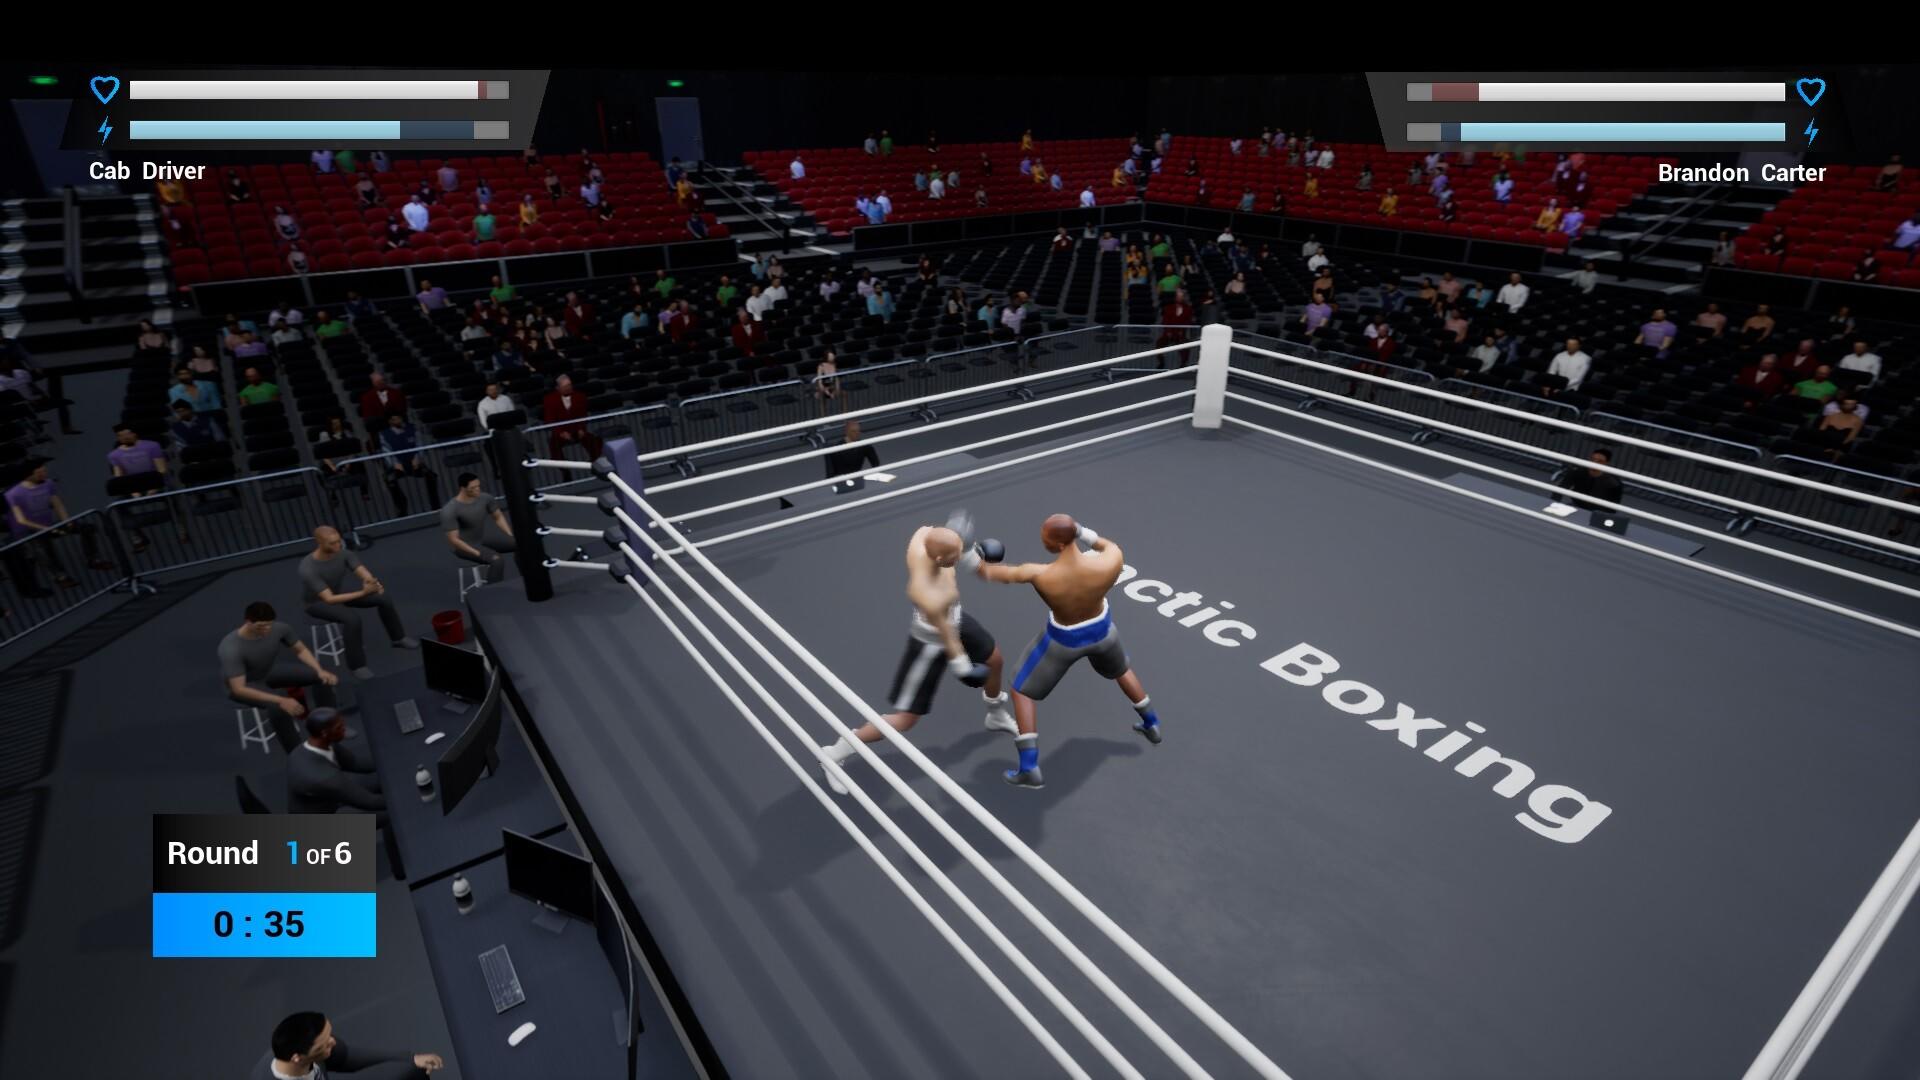 Tactic Boxing 게임 스크린 샷